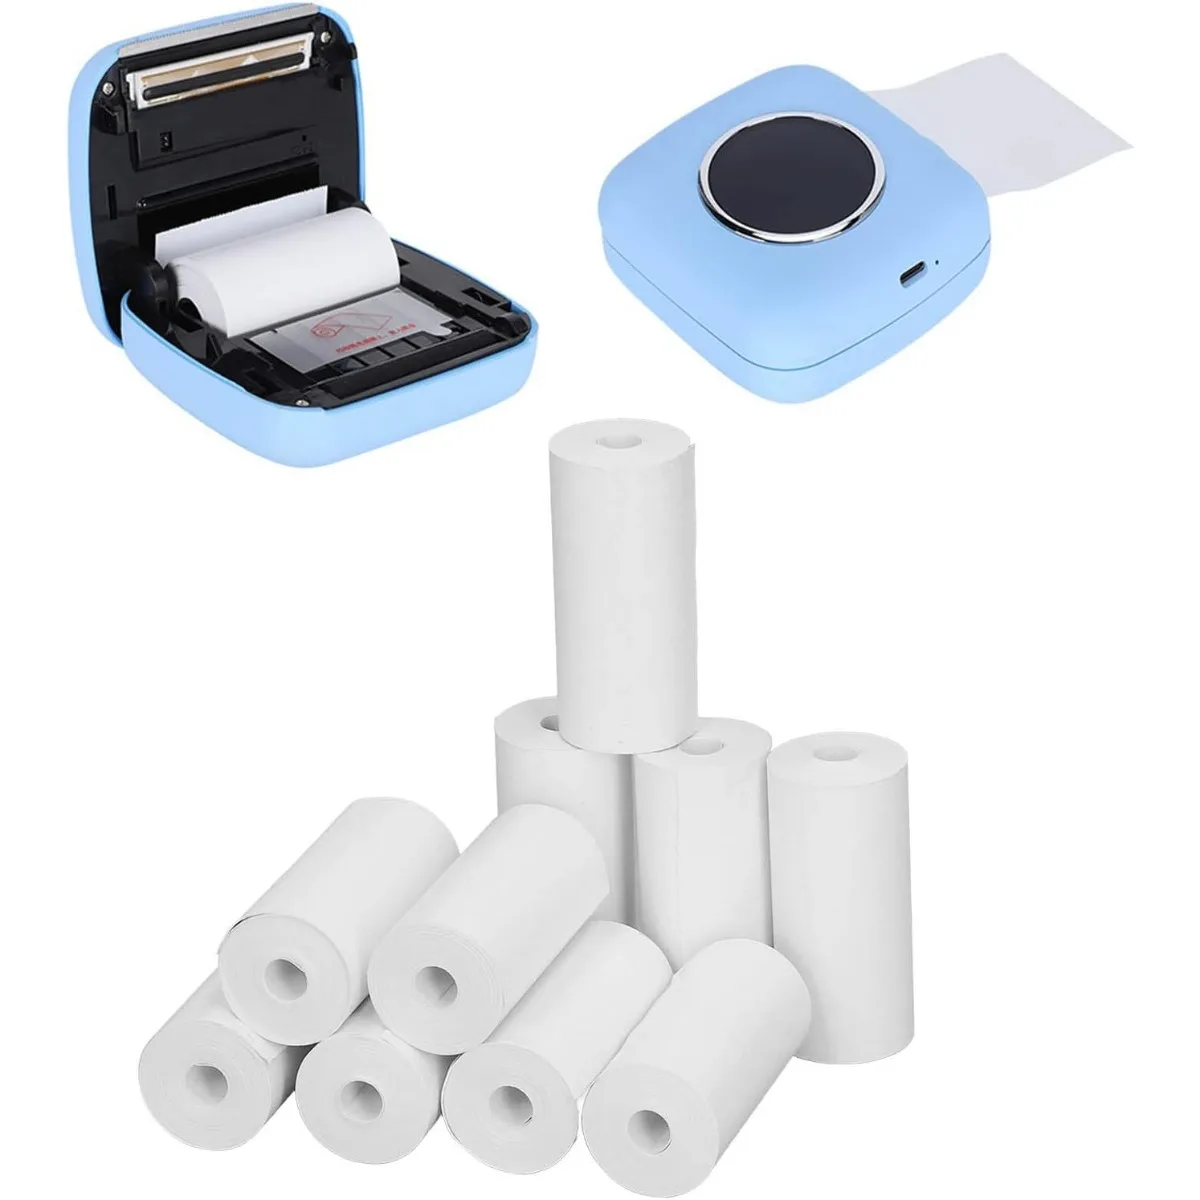 10 Rolls Printable Paper Rolls Mini Printer Paper Thermal Label 57 X 25mm White Printable Heat Sensitive Thermal Paper Rolls